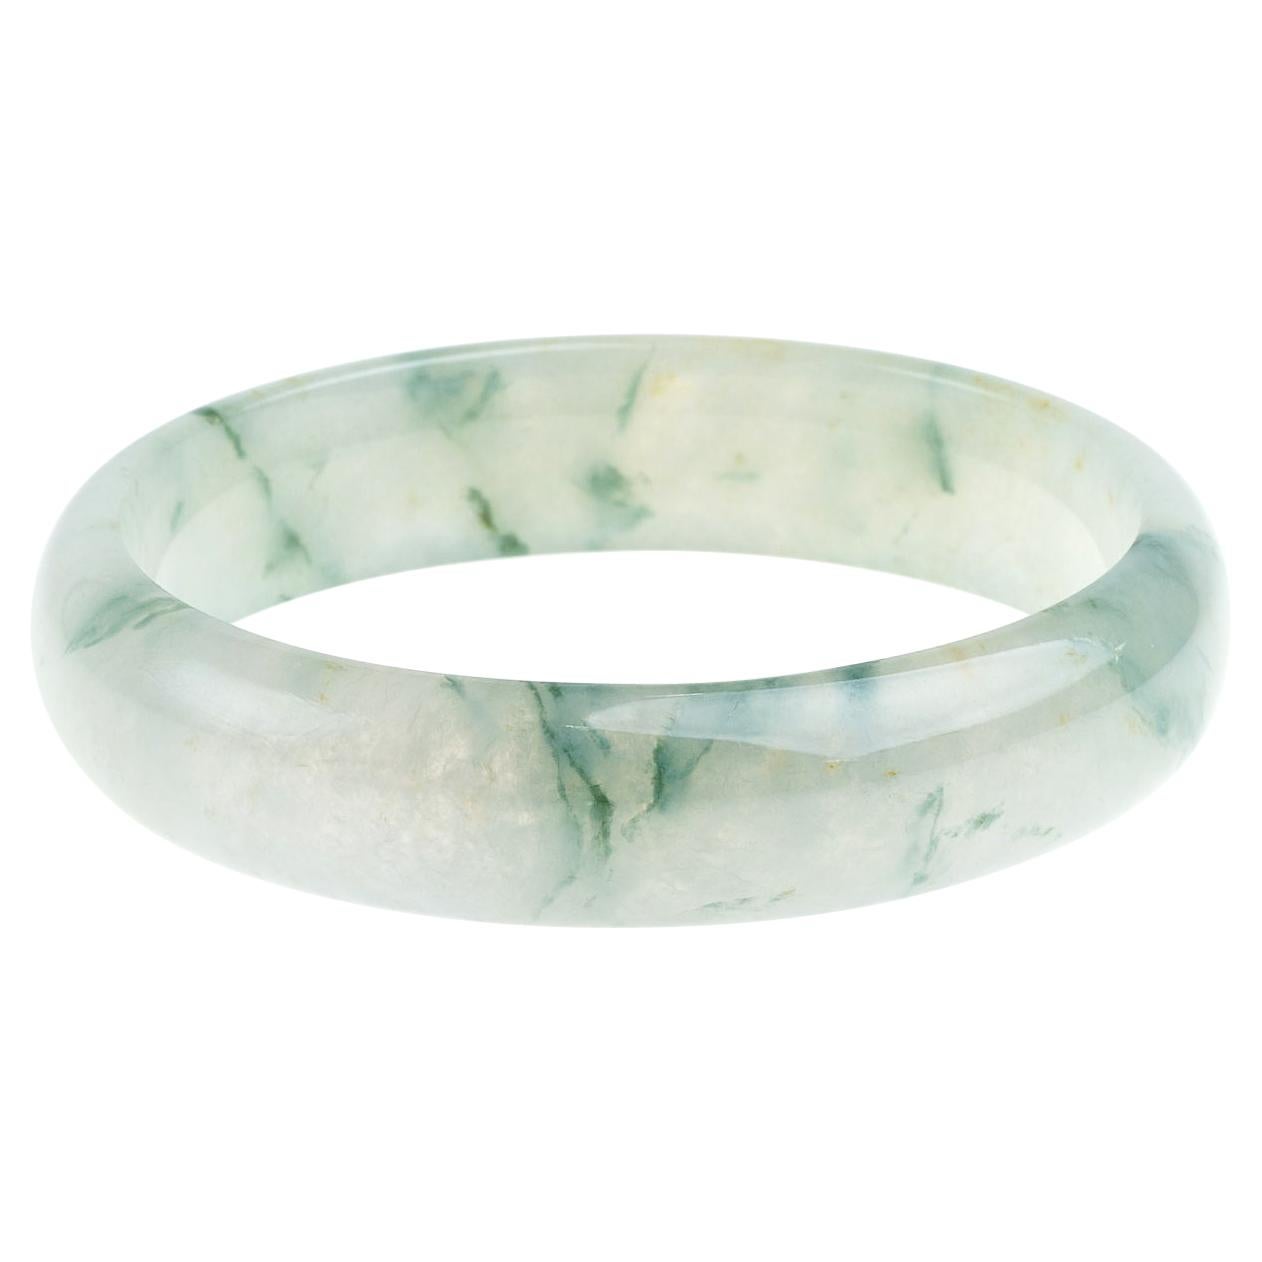 Ice and Green Jadeite Jade Bangle, Certified Untreated